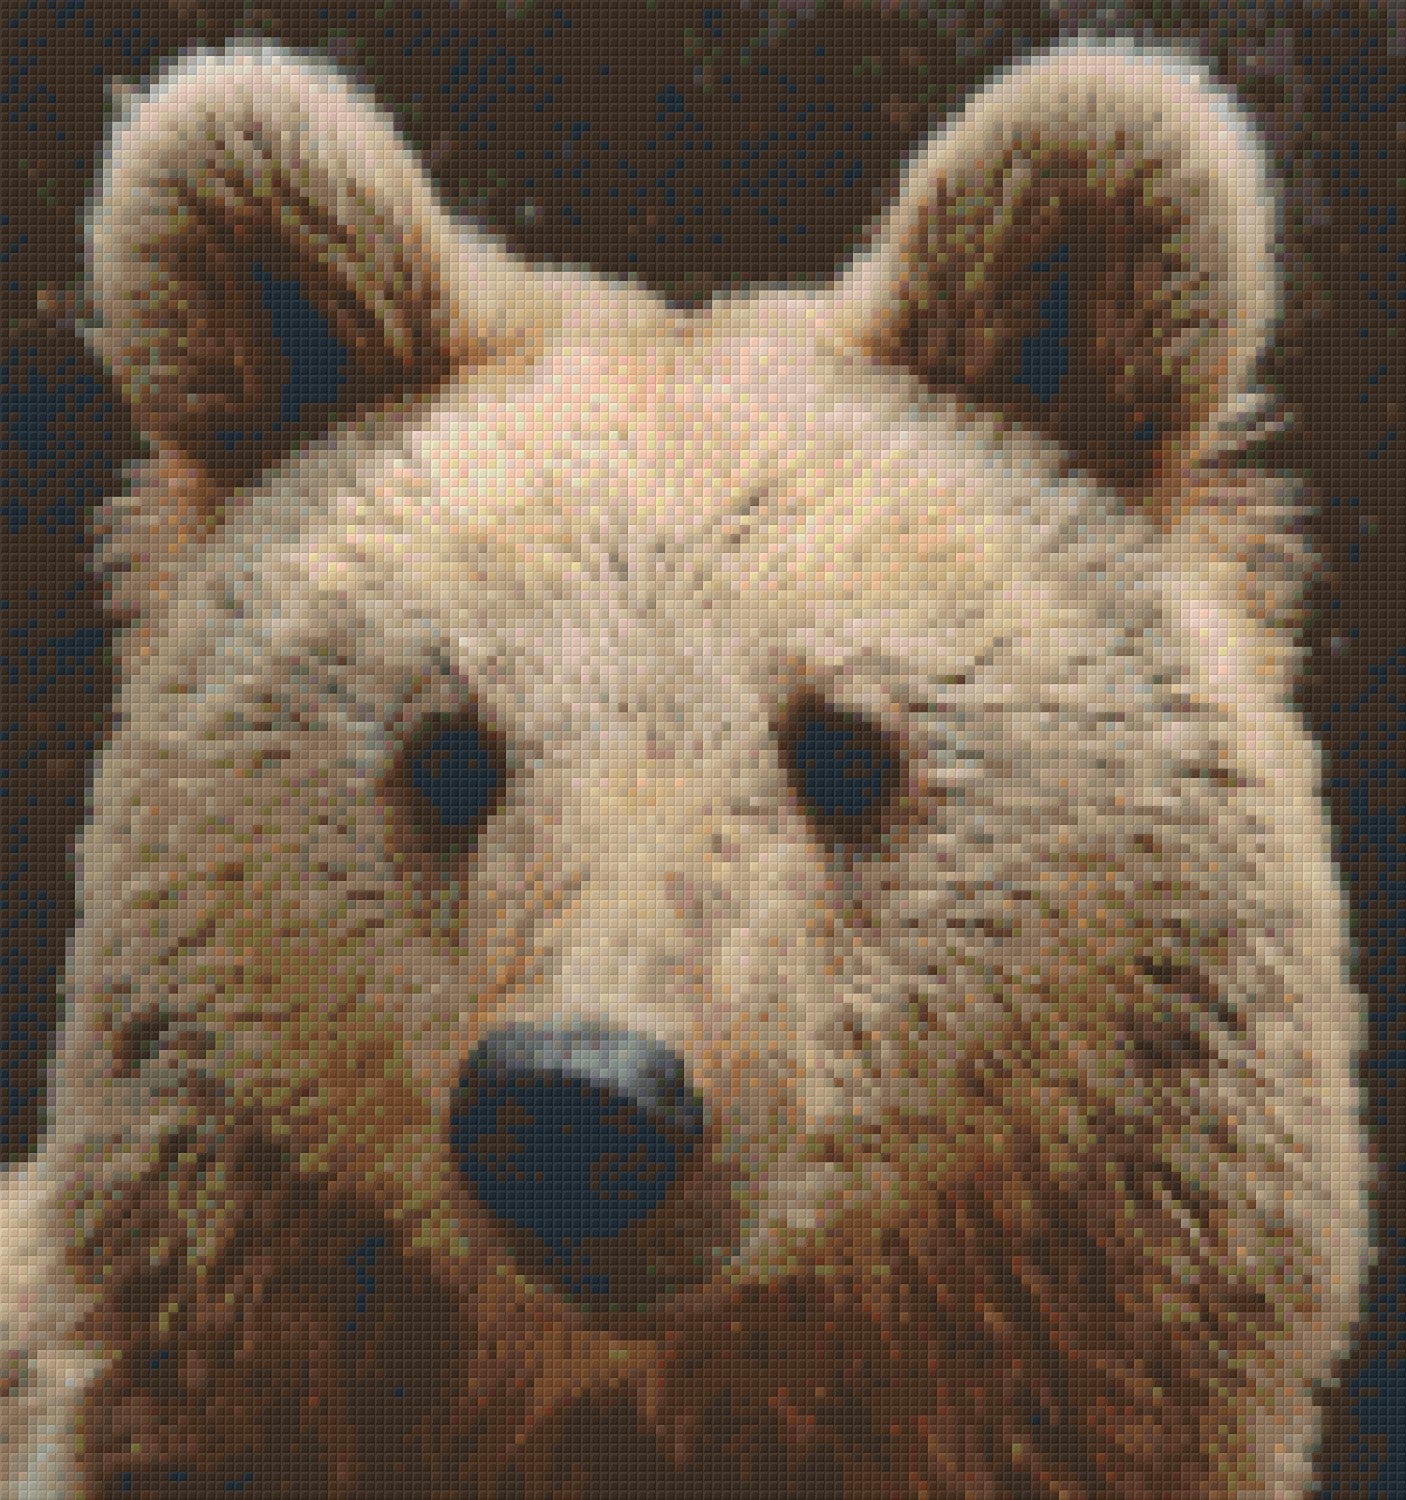 Pixel hobby classic set - brown bear